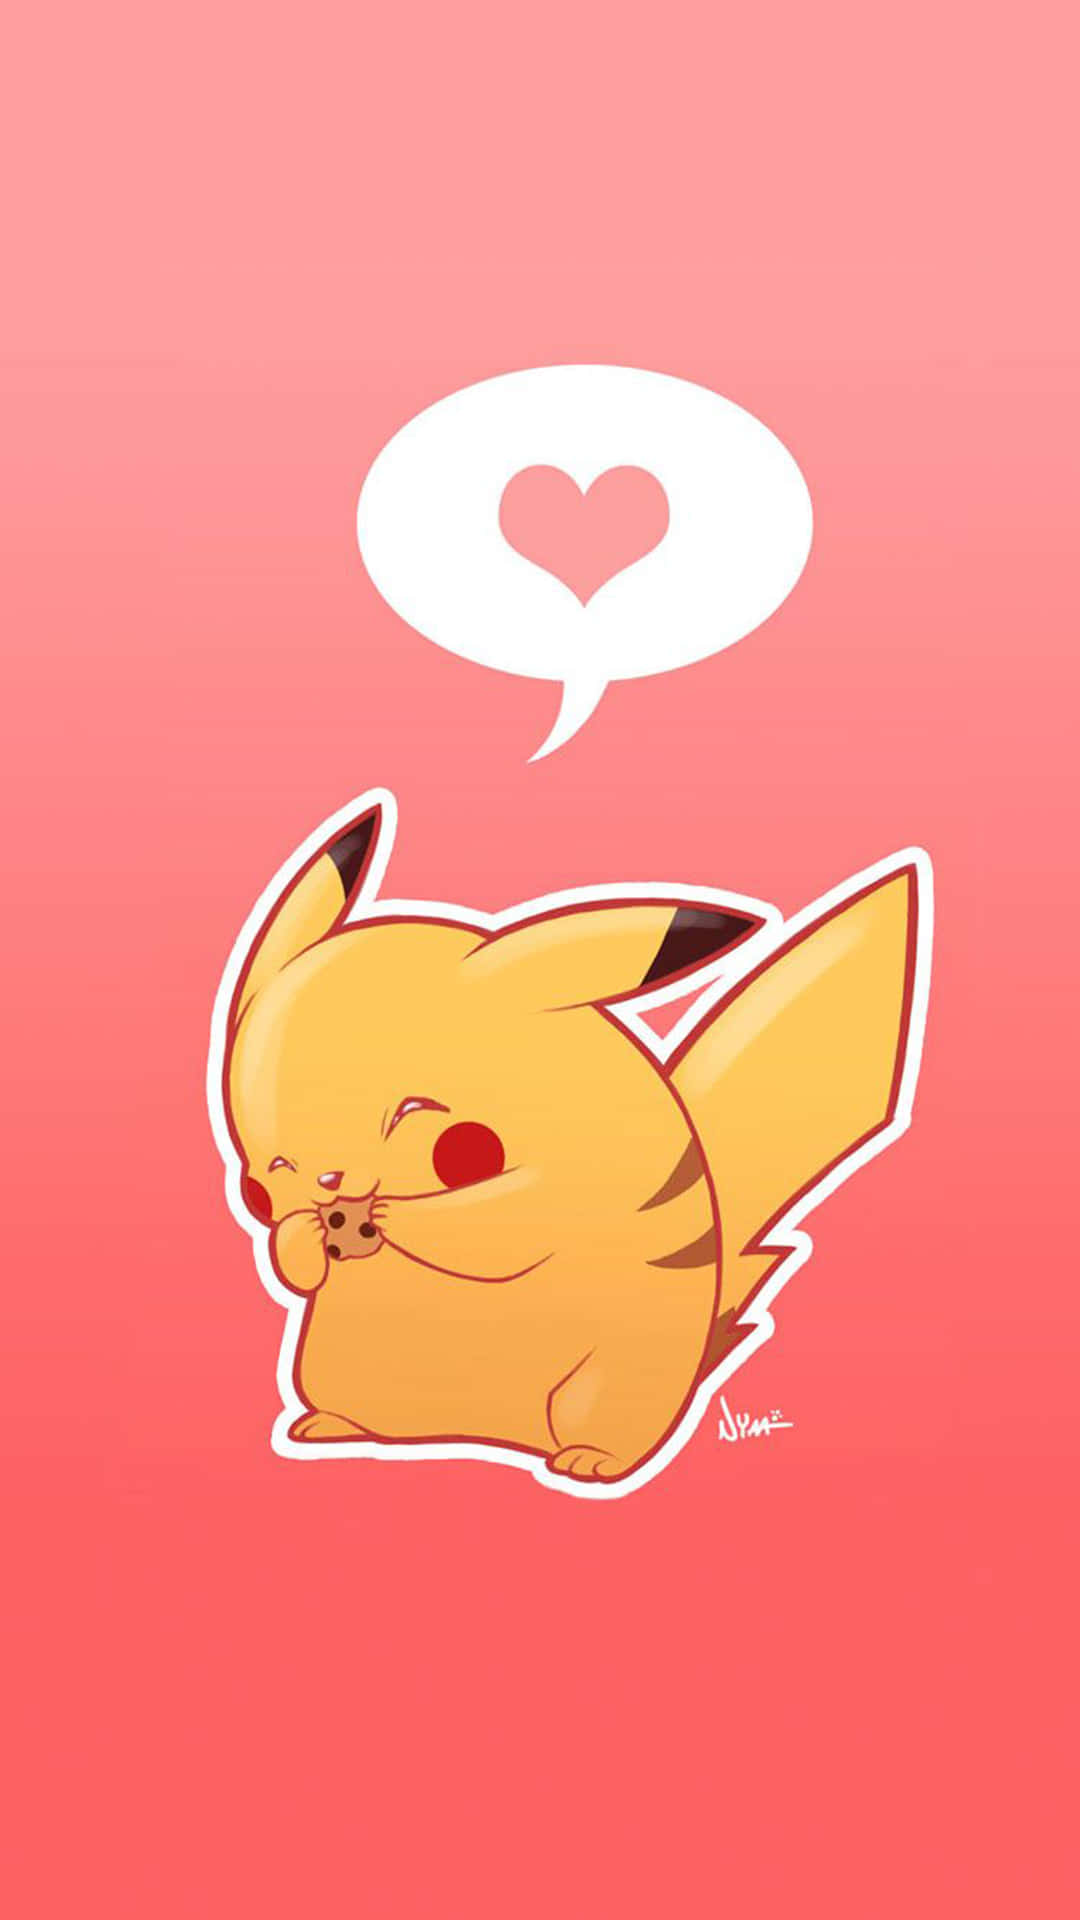 Adorable Pikachu Love Illustration Wallpaper